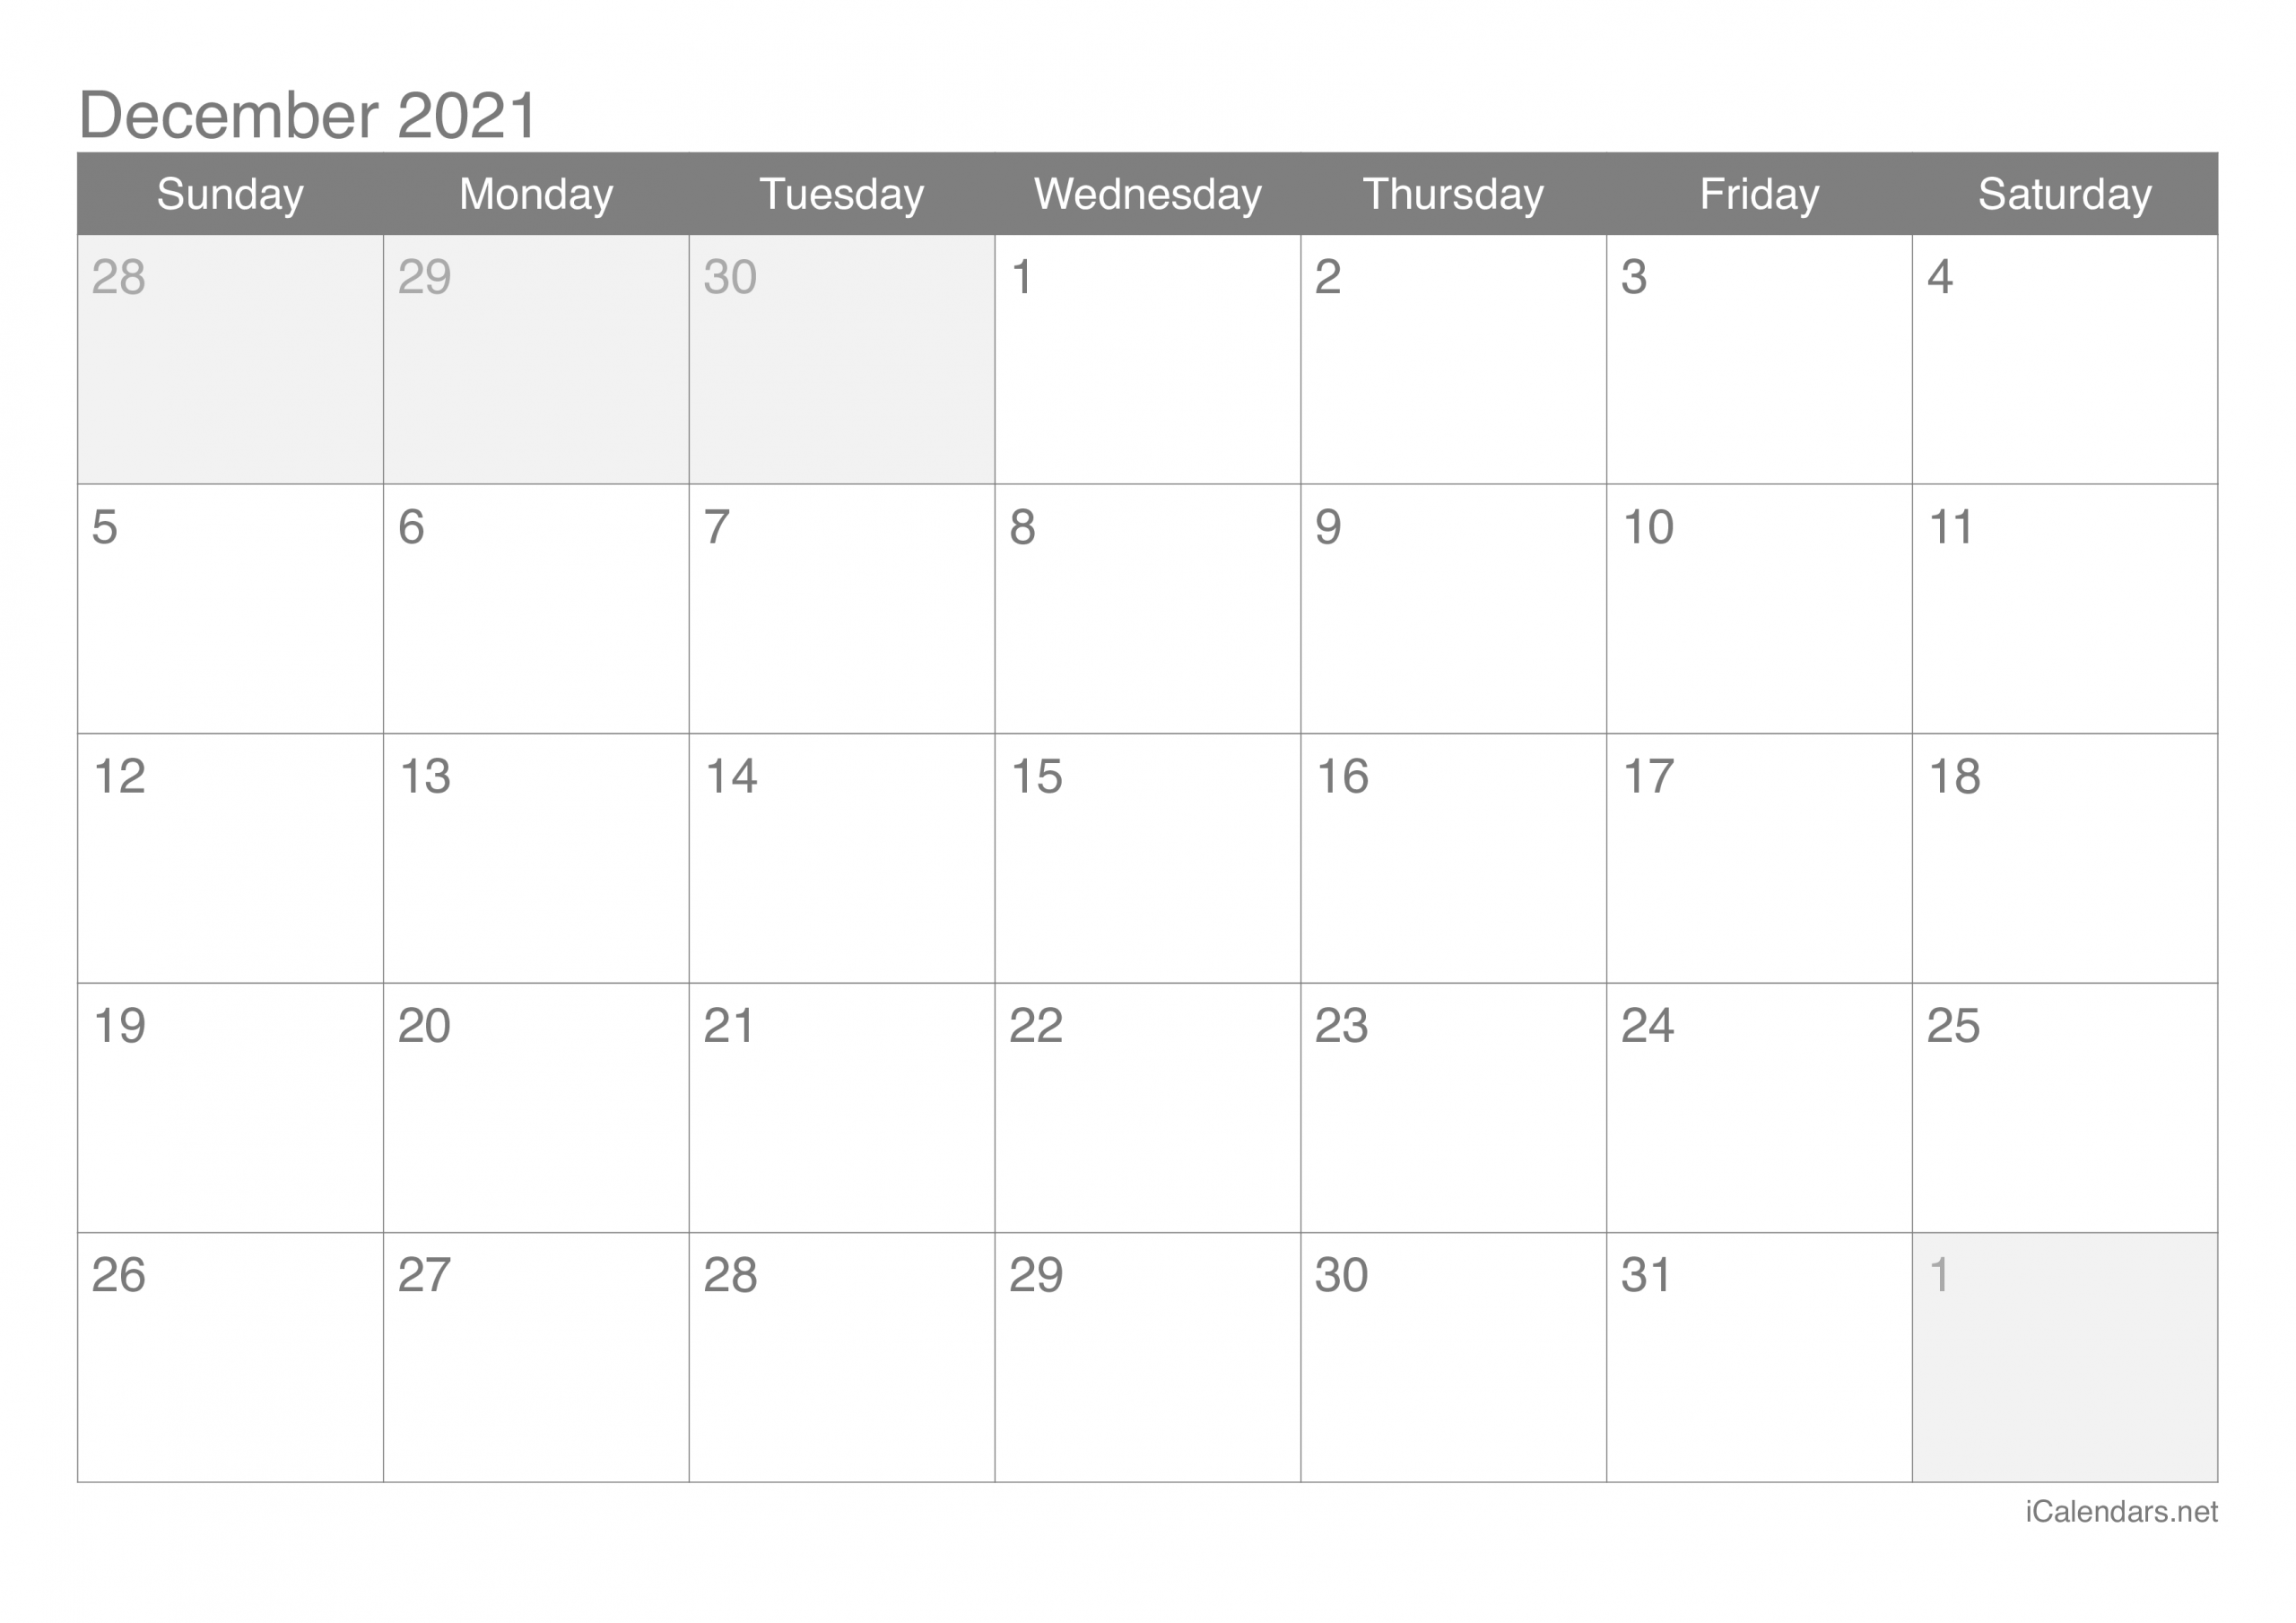 December 2021 Printable Calendar - Icalendars December To February Calendar 2021